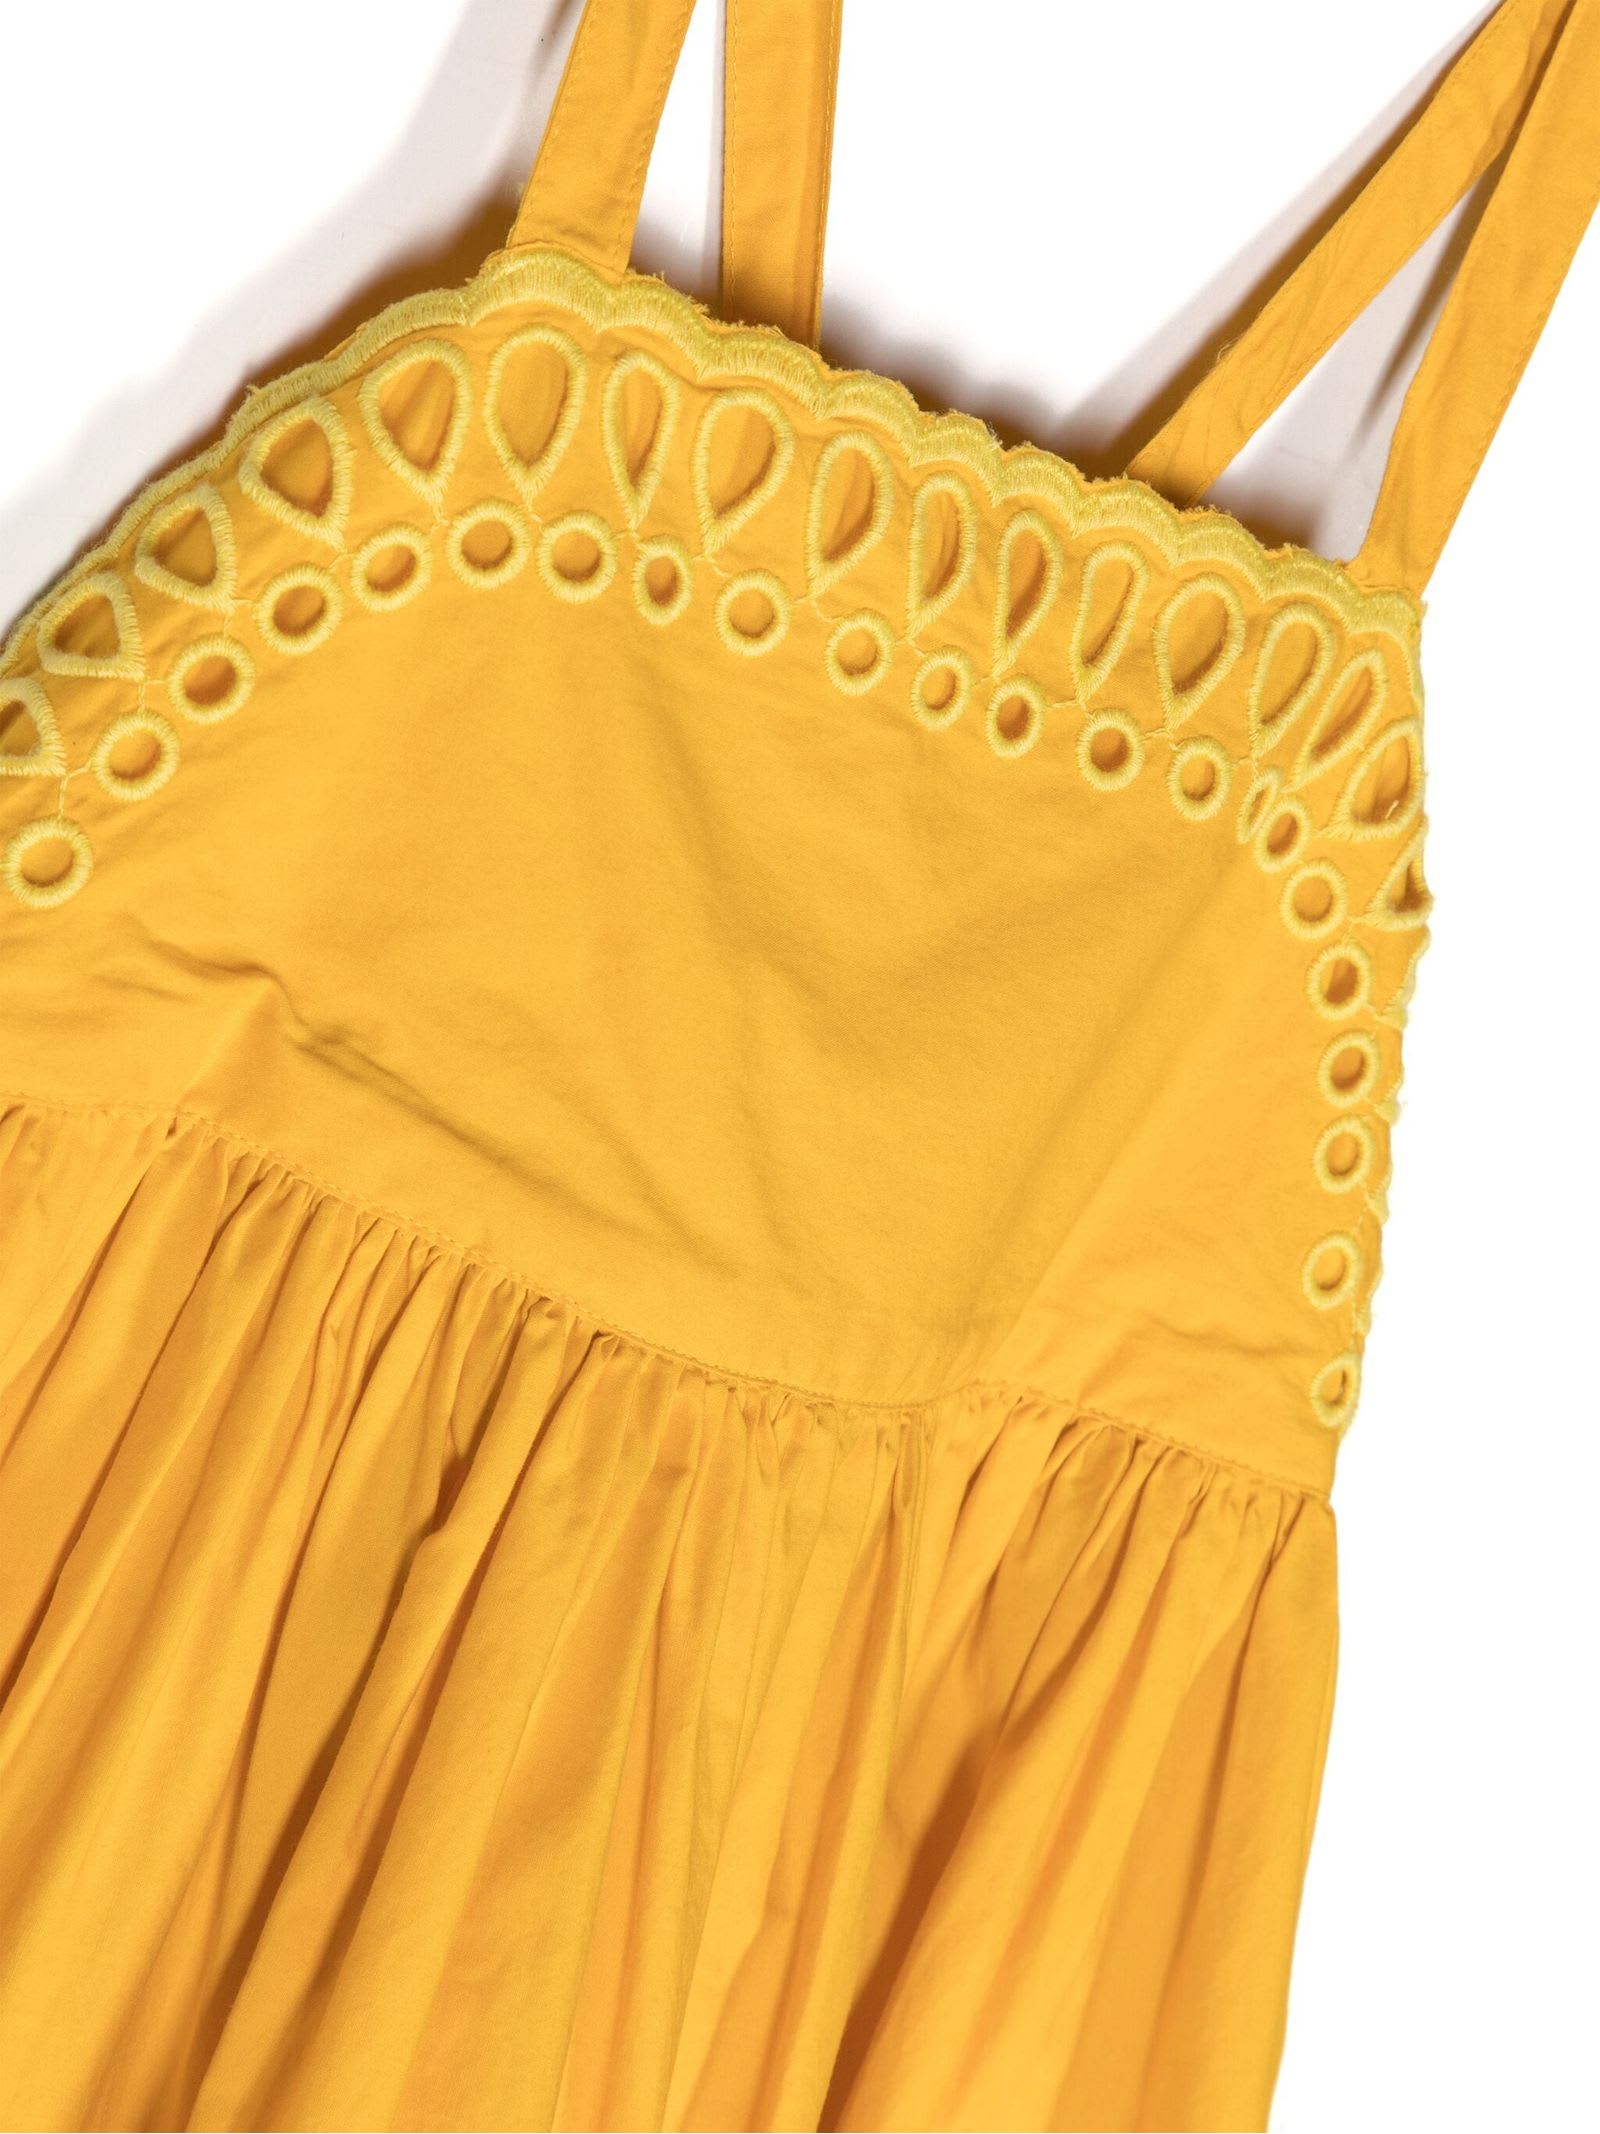 Shop Stella Mccartney Kids Dresses Yellow